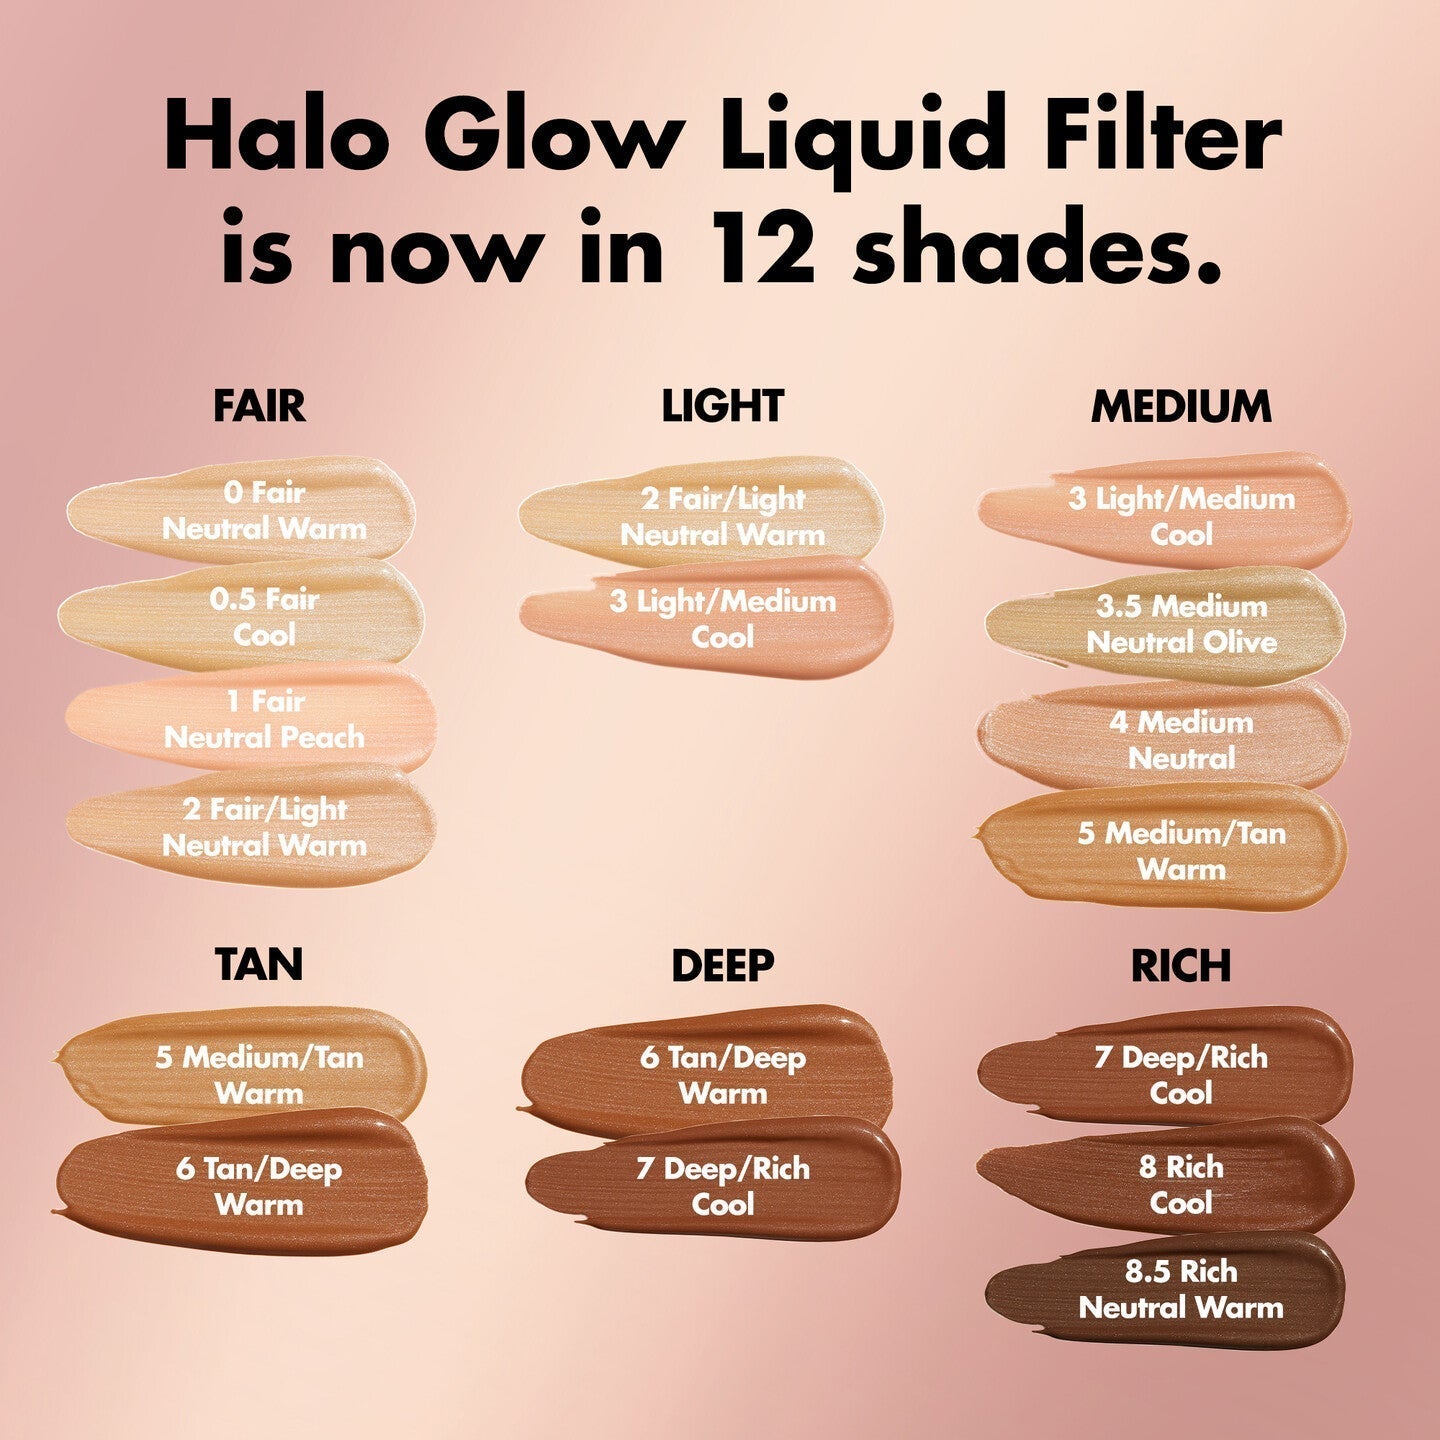 Halo Glow Liquid Filter - 3.5 Medium Neutral Olive